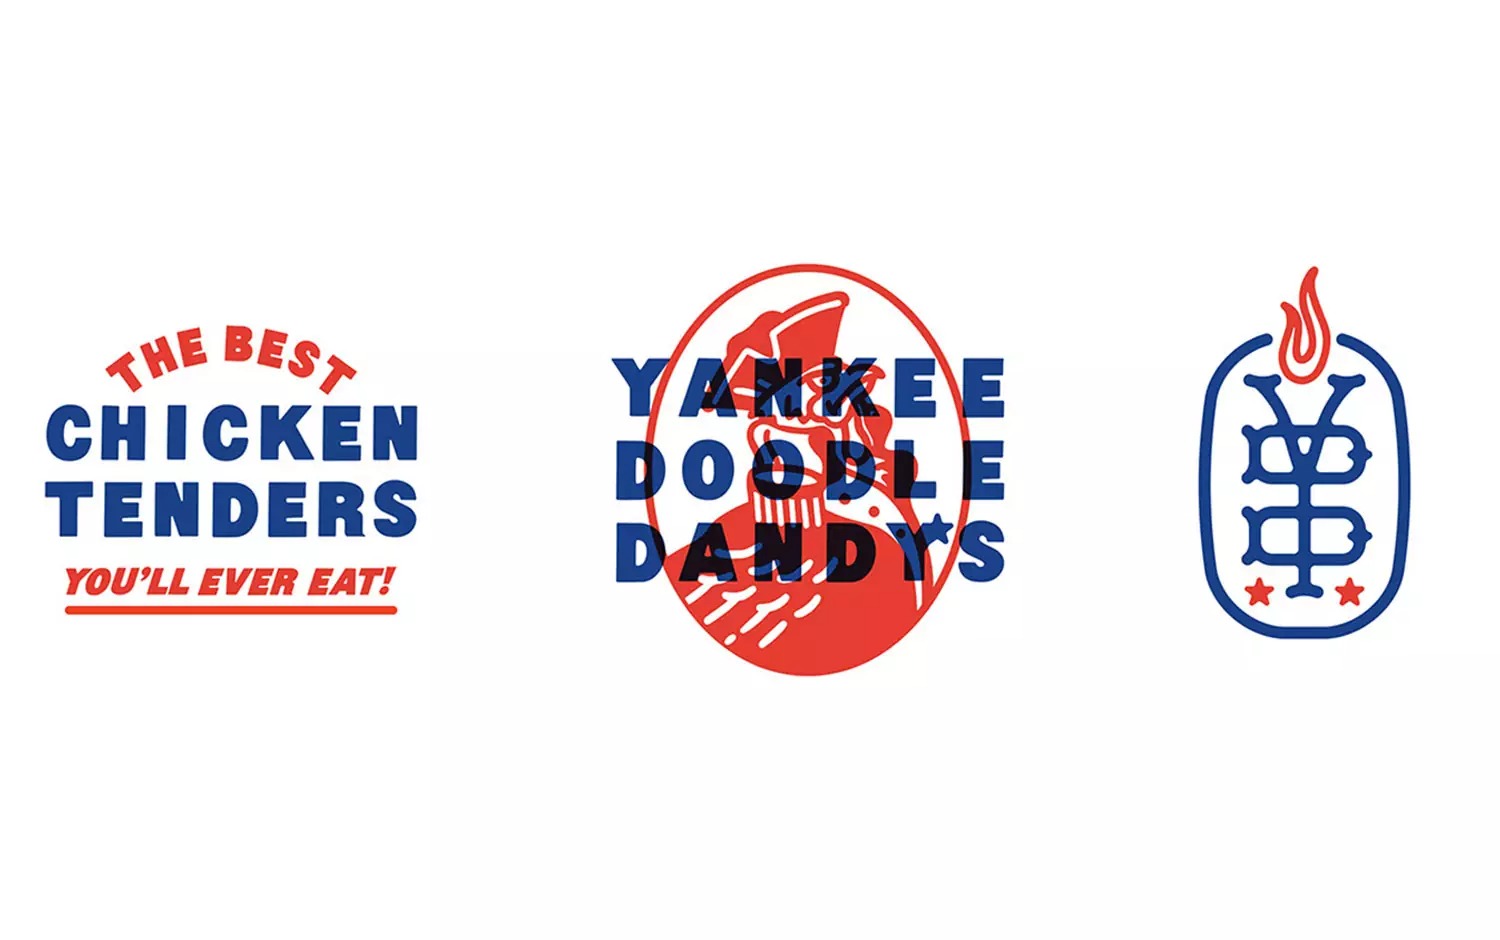 Yankee Doodle Dandy's快餐厅品牌视觉设计